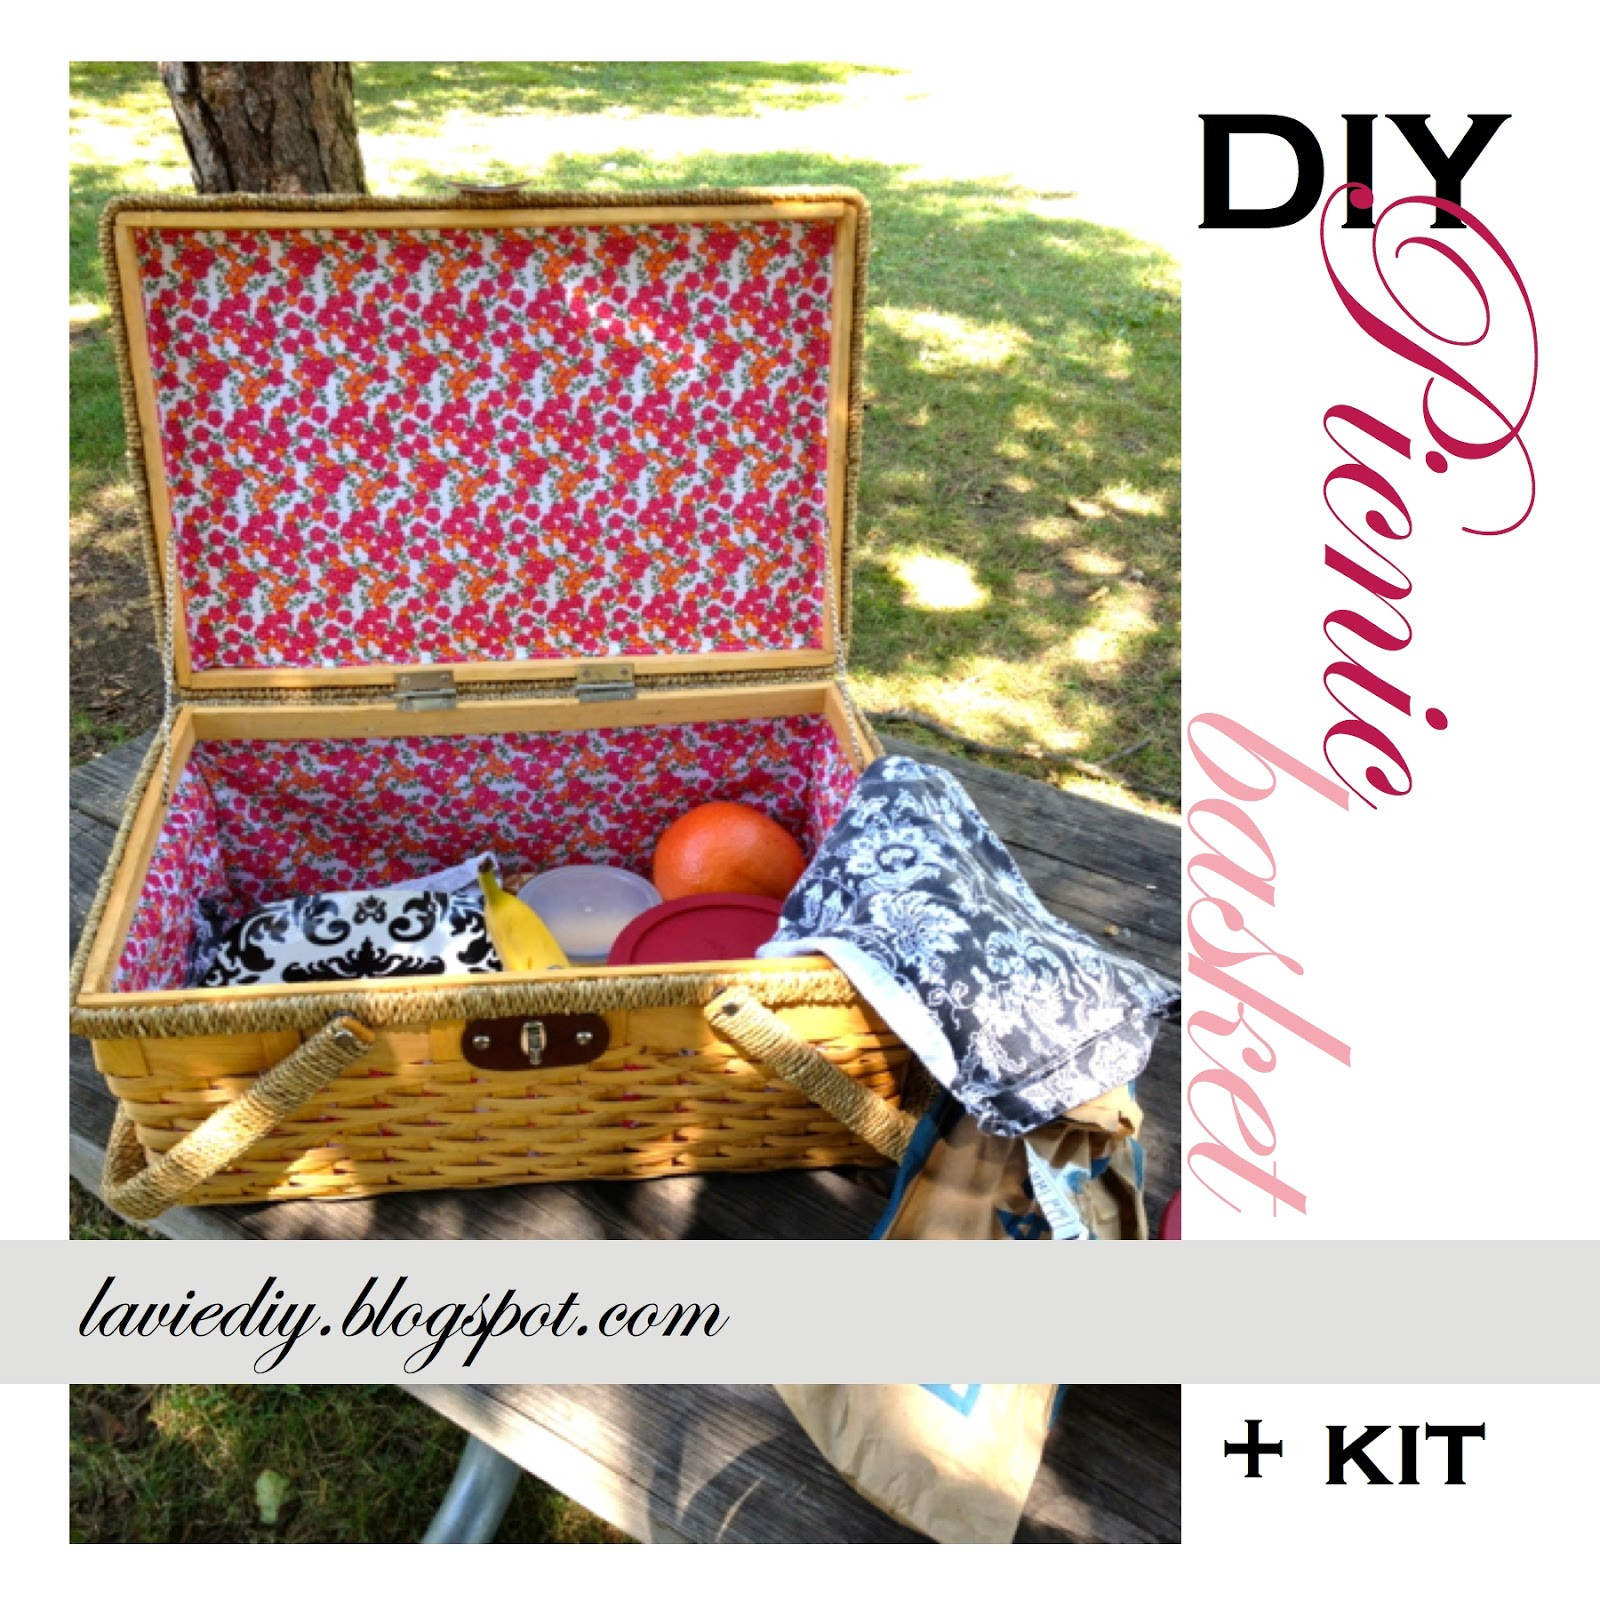 Best ideas about DIY Picnic Basket
. Save or Pin la vie DIY DIY Picnic Basket Kit Now.